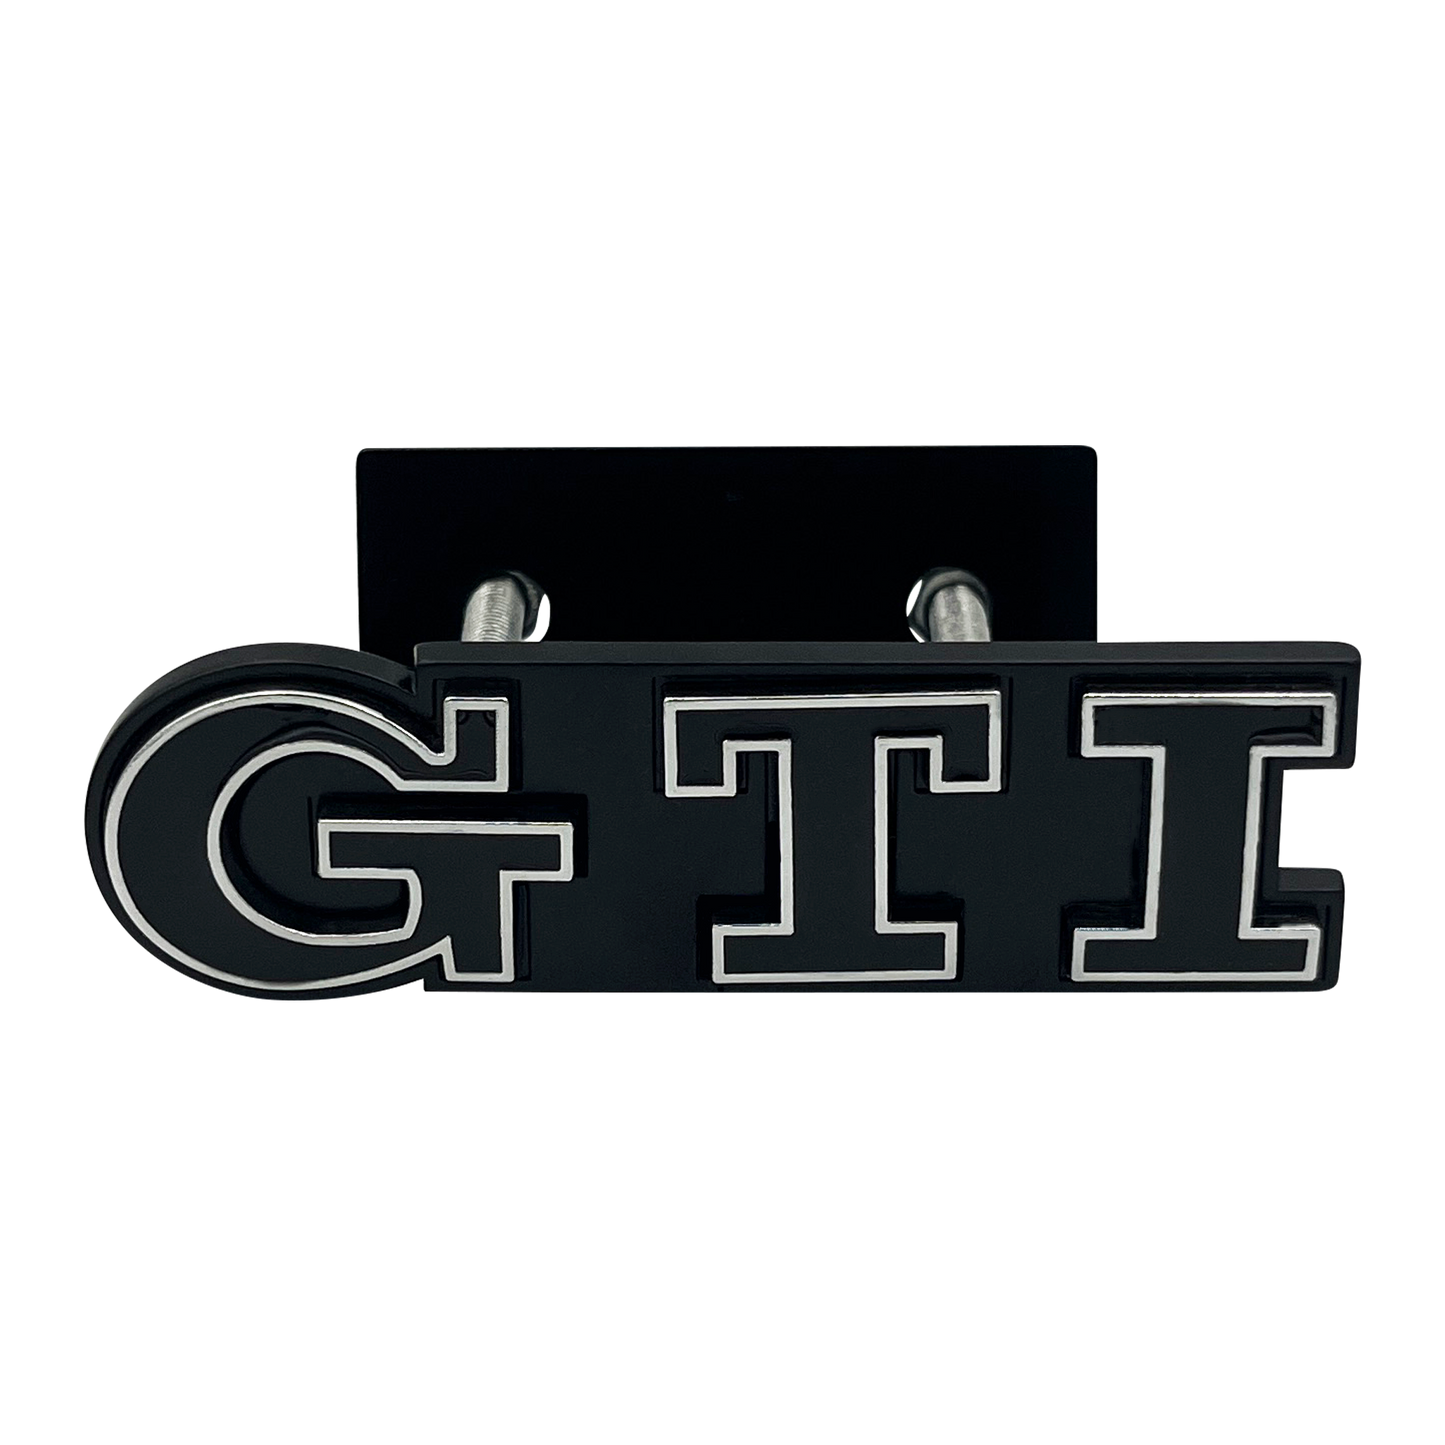 Sort & Chrome VW GTI Front Emblem